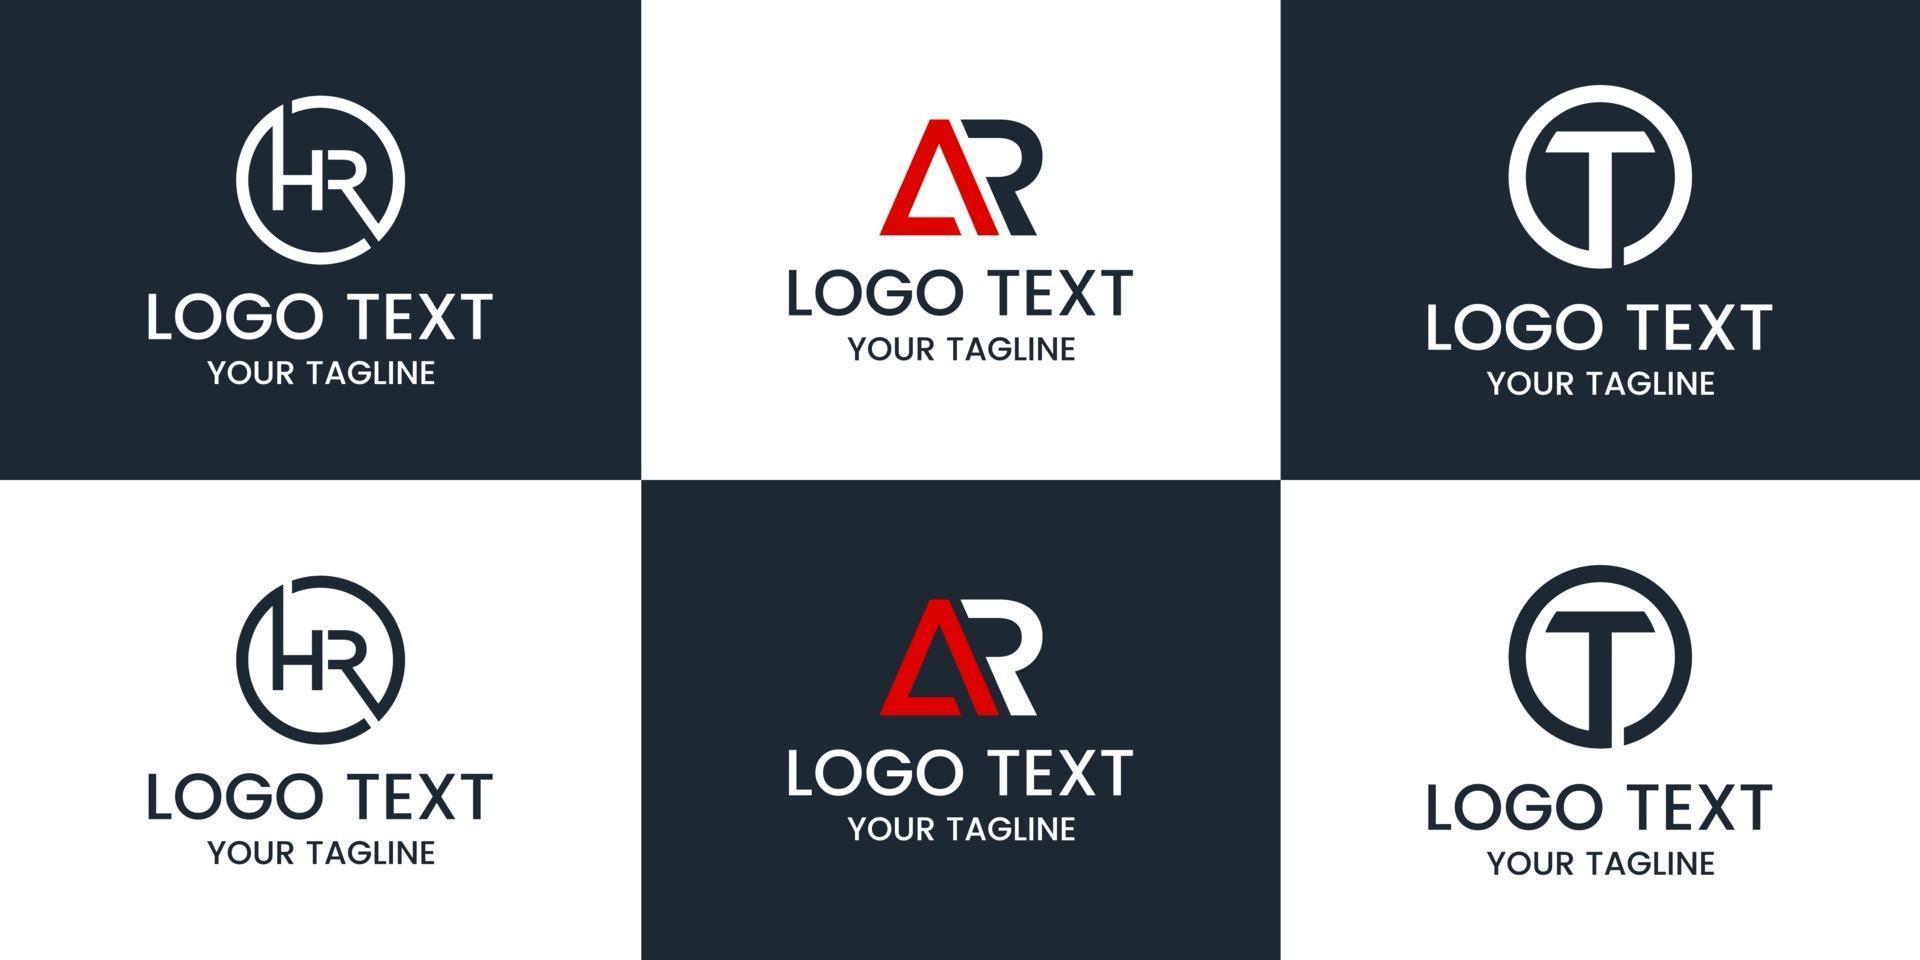 Monogram set logo design template. vector